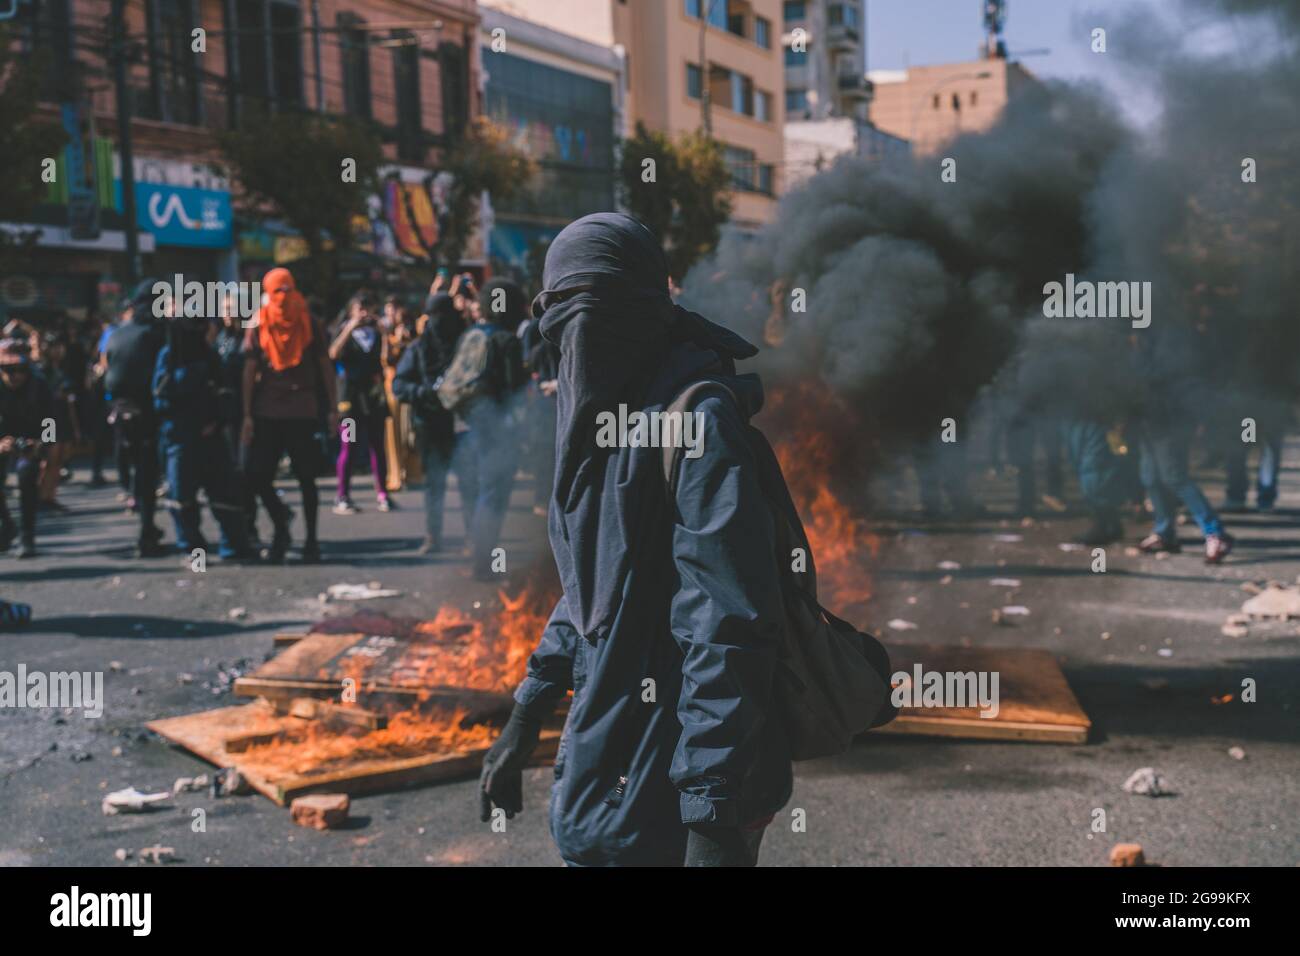 Chilean Protestor dressed in black attends anti-government protest Stock Photo